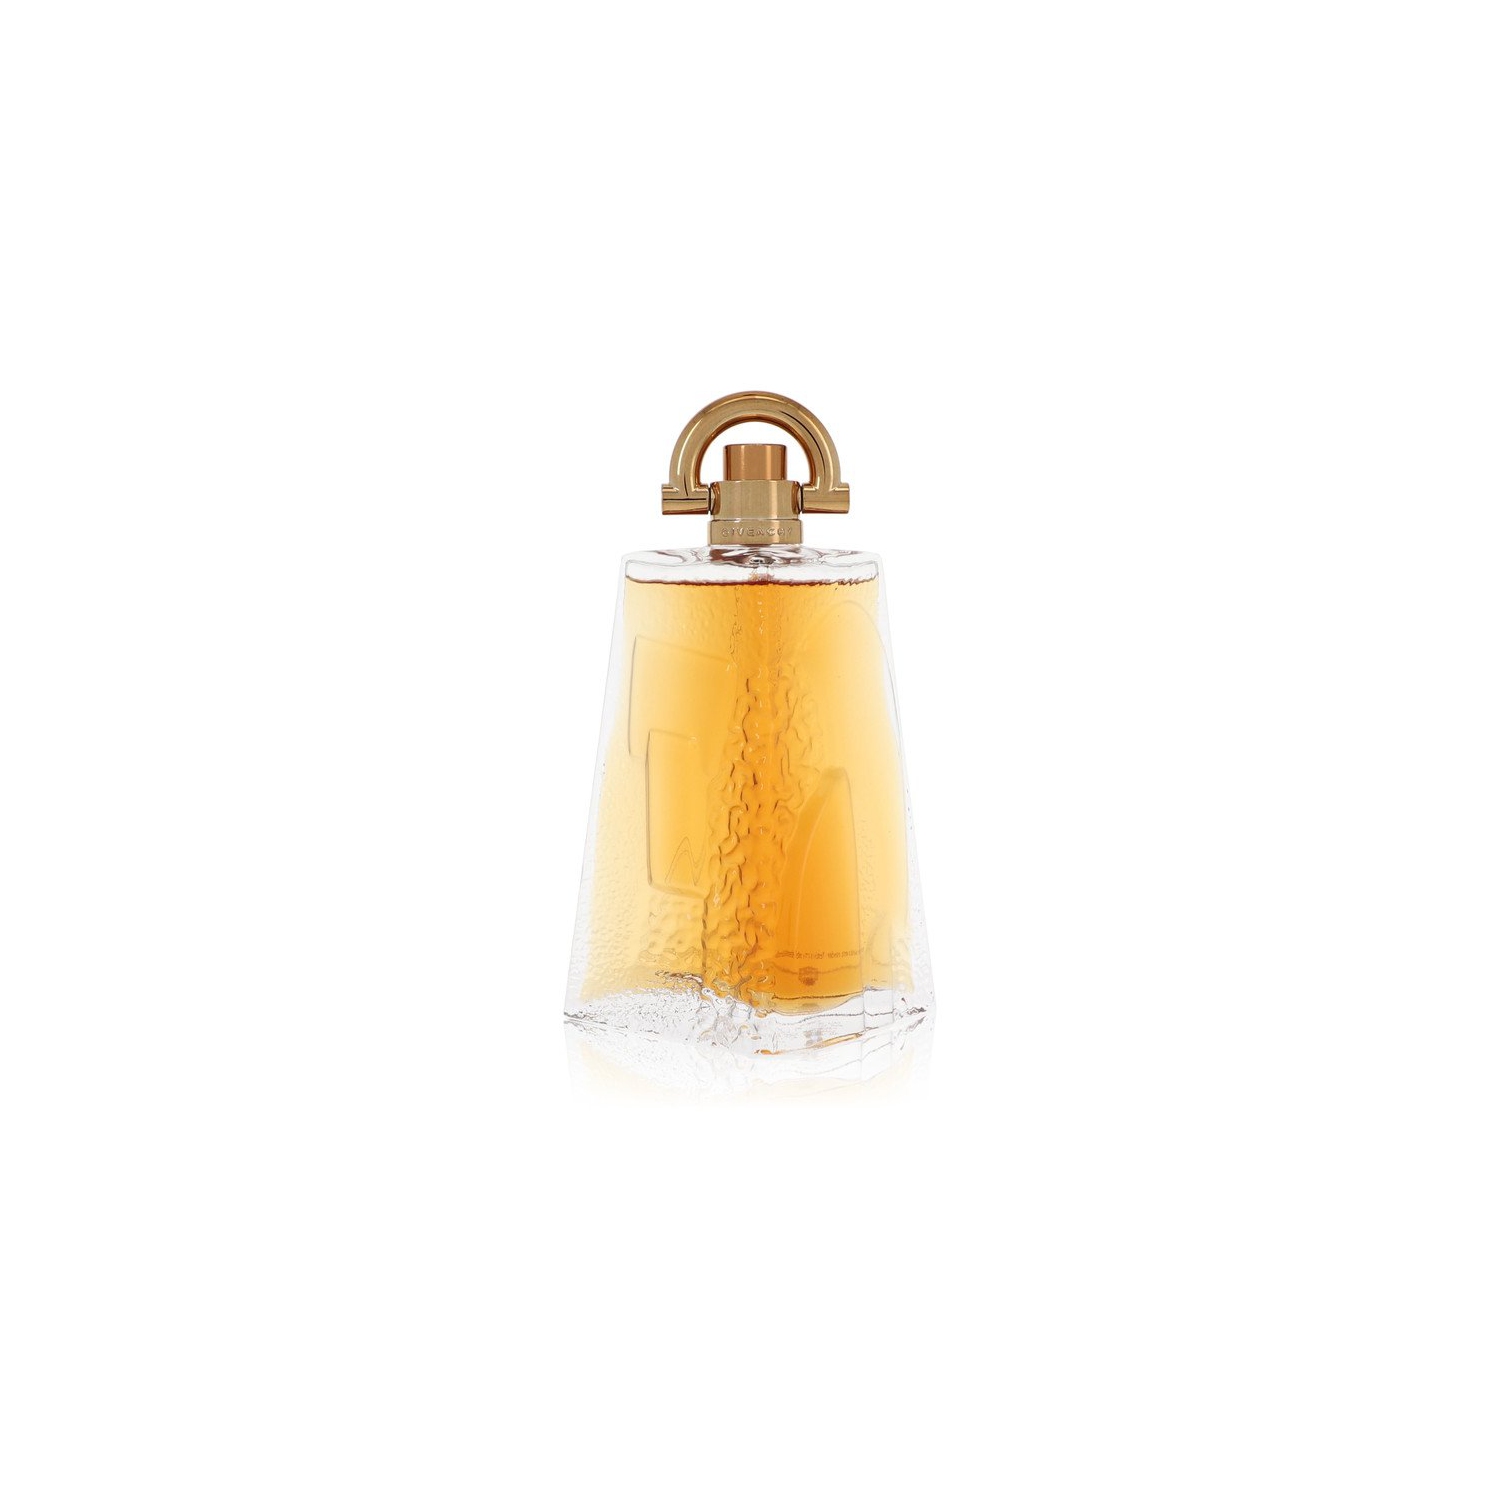 Pi by Givenchy Eau De Toilette Spray (Tester) 3.4 oz for Men